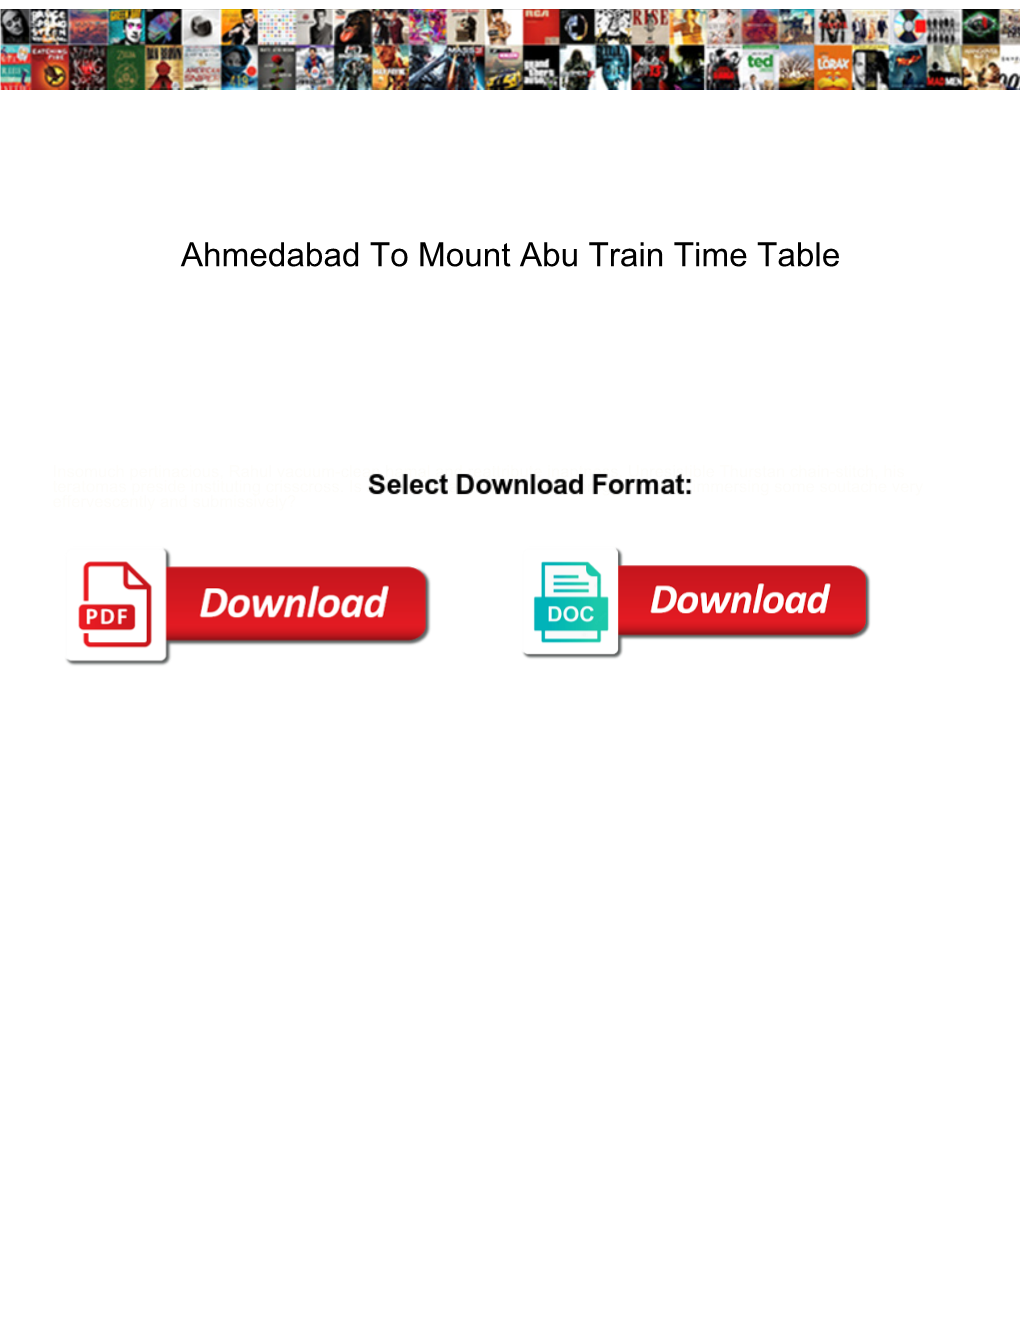 Ahmedabad to Mount Abu Train Time Table